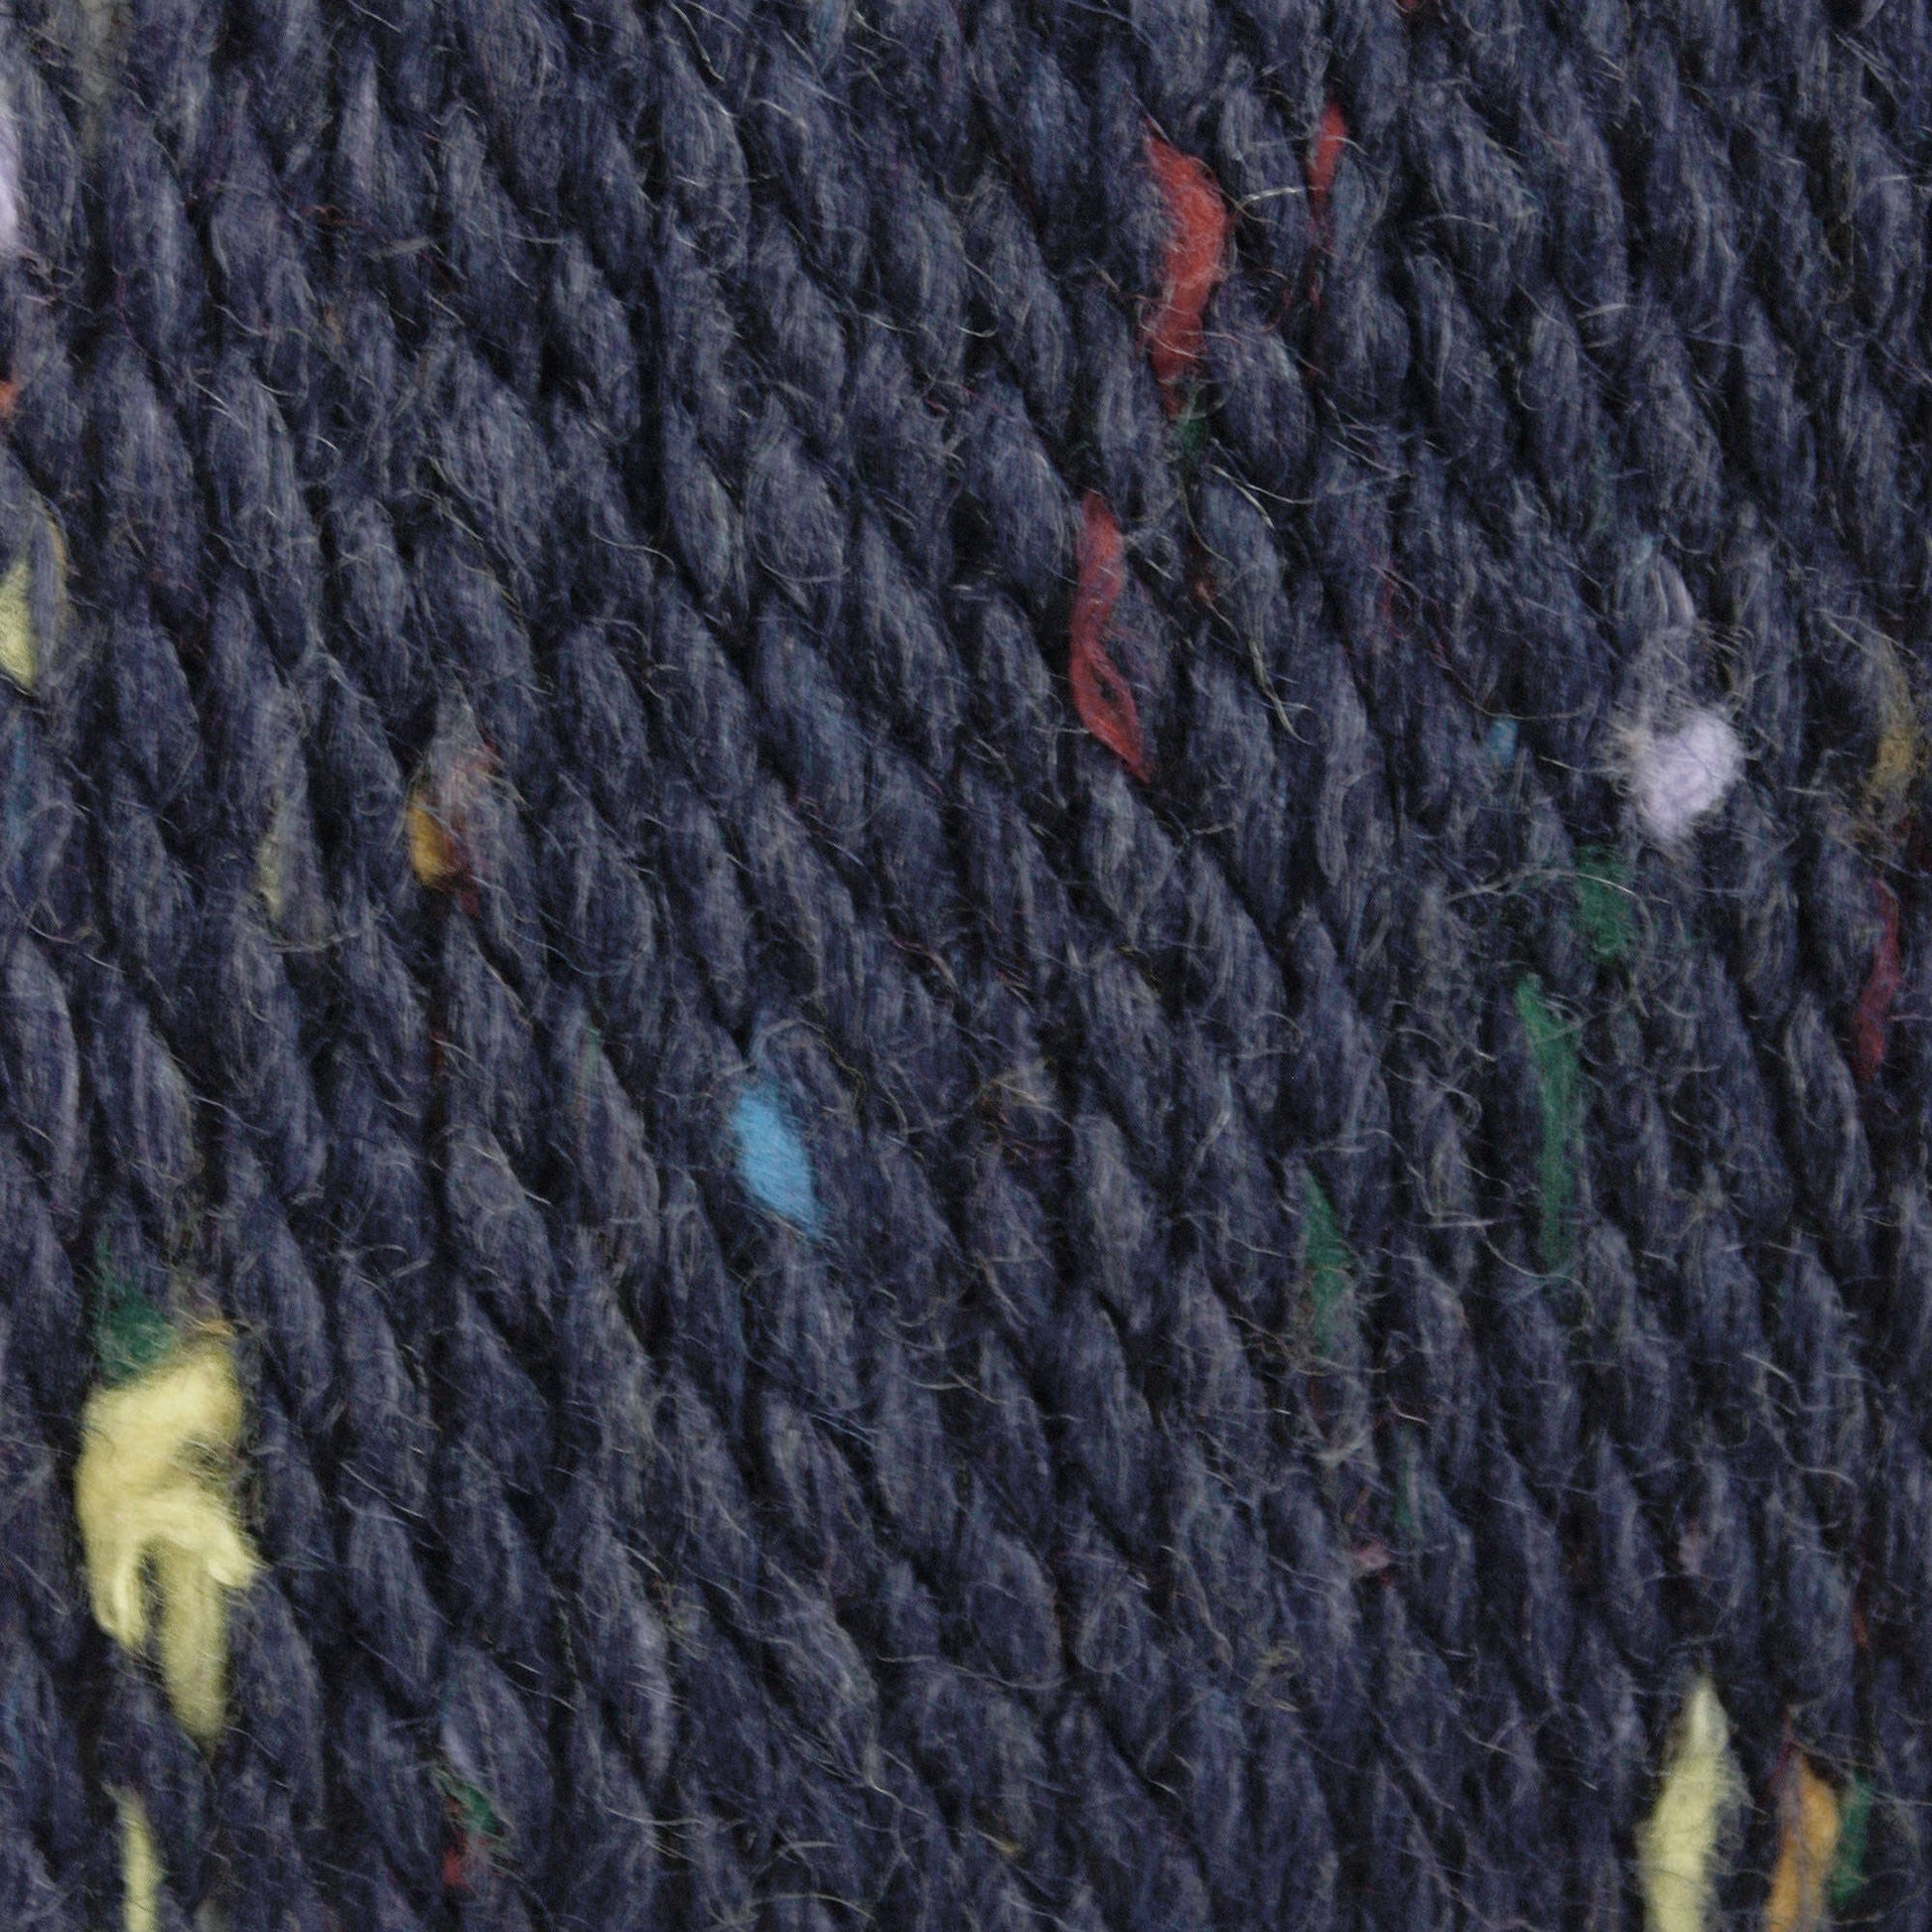 Patons Shetland Chunky Tweeds Yarn - Discontinued Shades